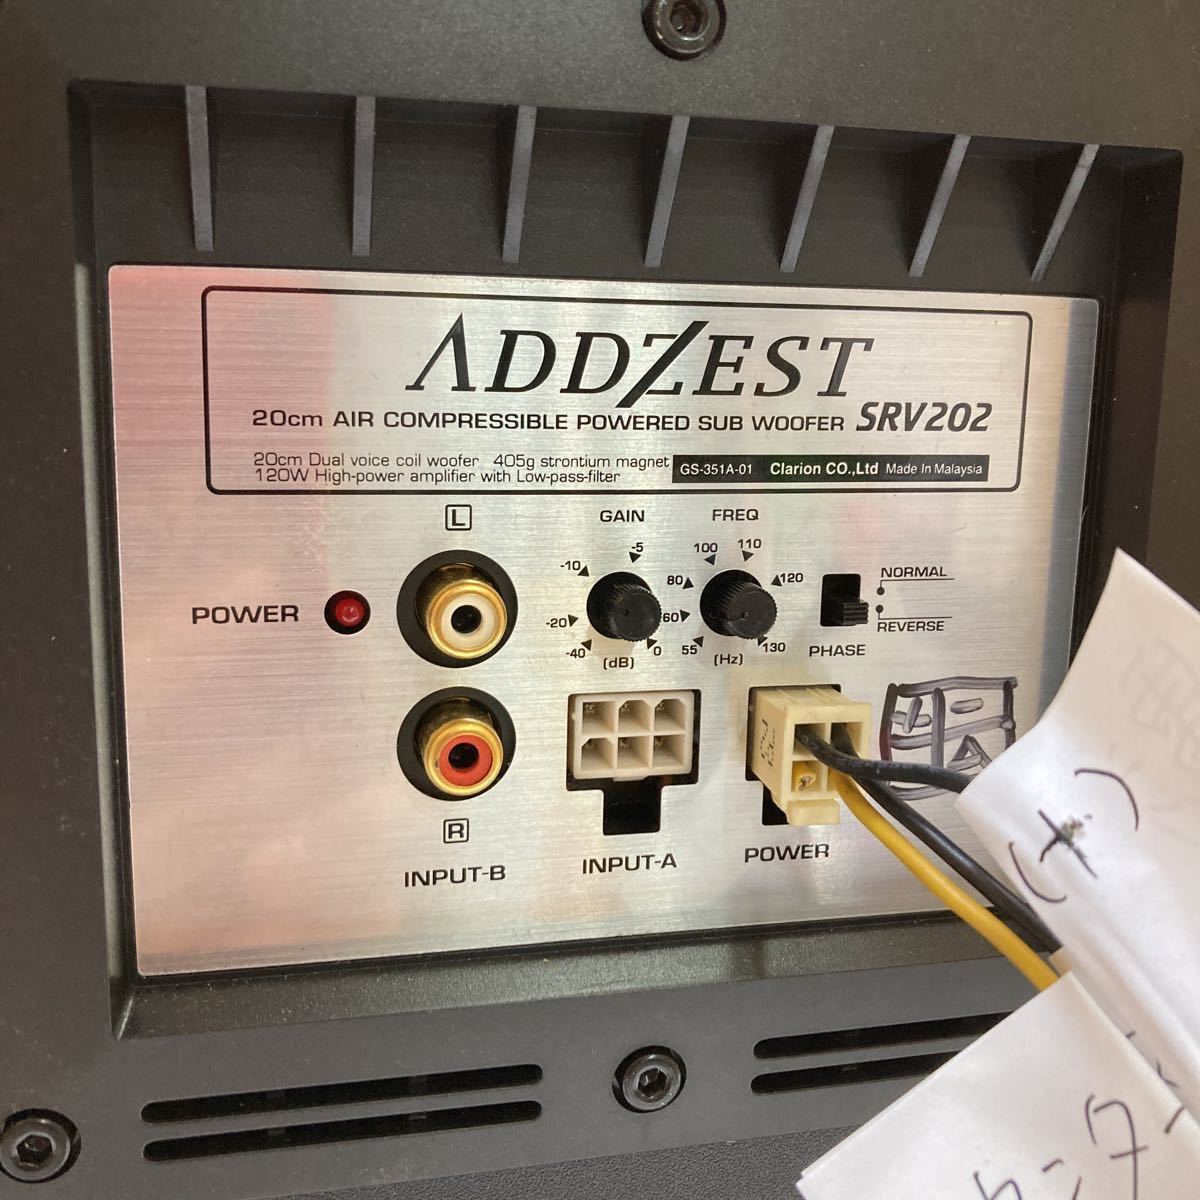 GXL8840 Addzest ADDZEST amplifier built-in 20cm subwoofer woofer SRV202 operation verification settled present condition goods 1018